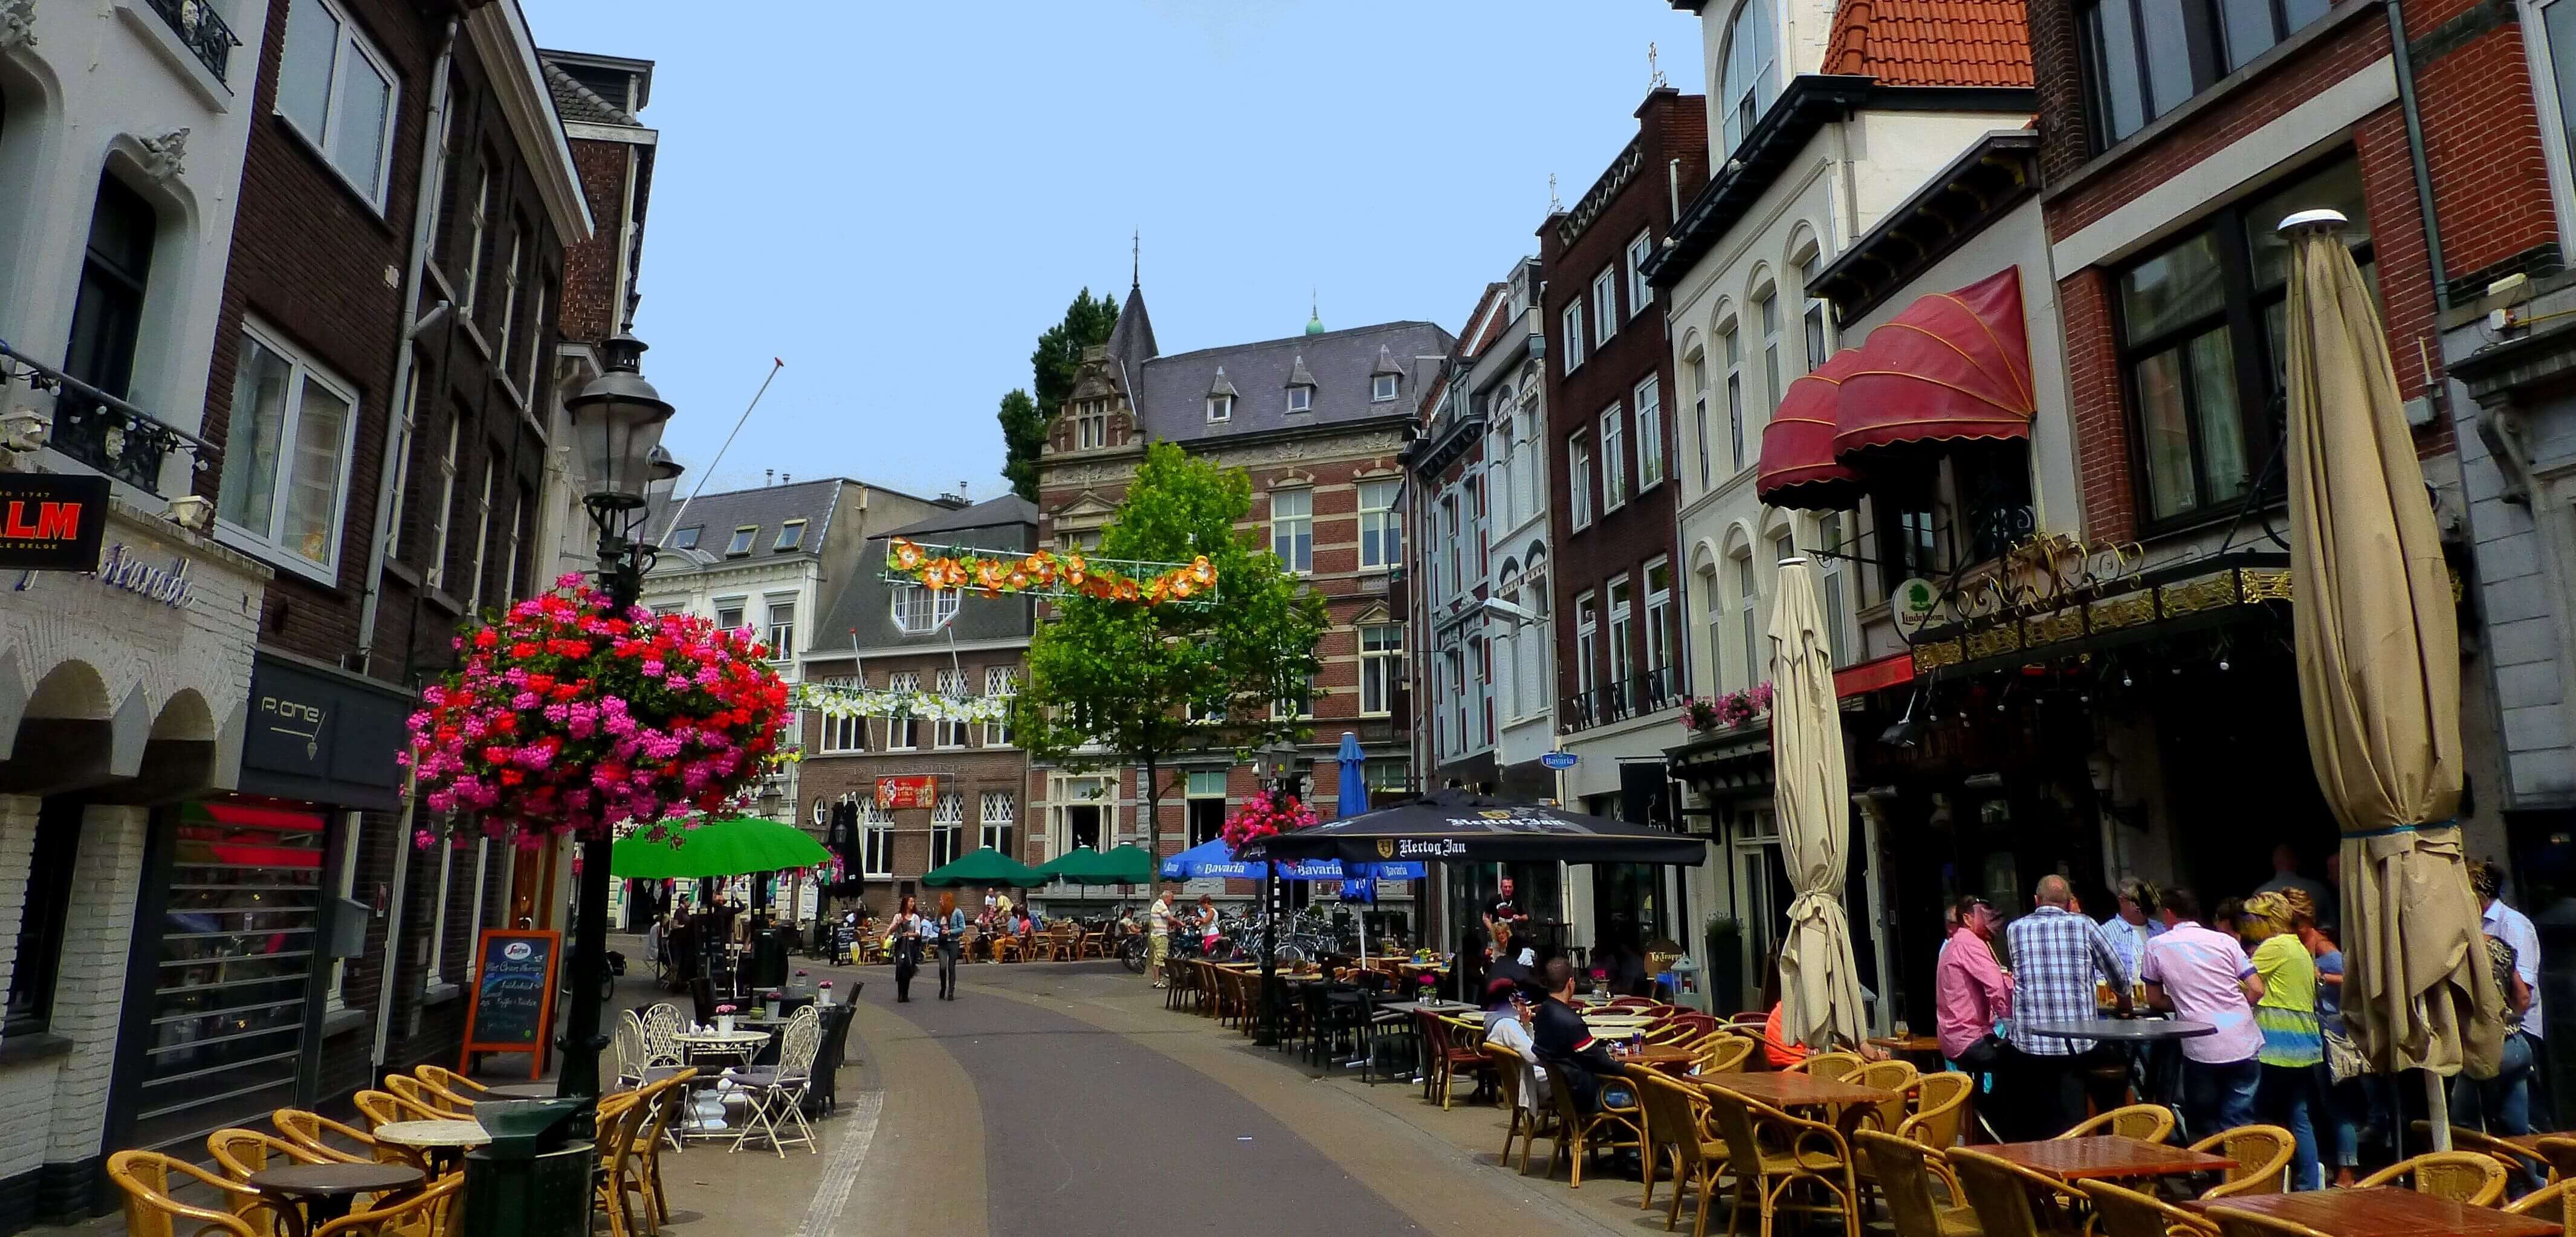 Survey on Mobility in Venlo